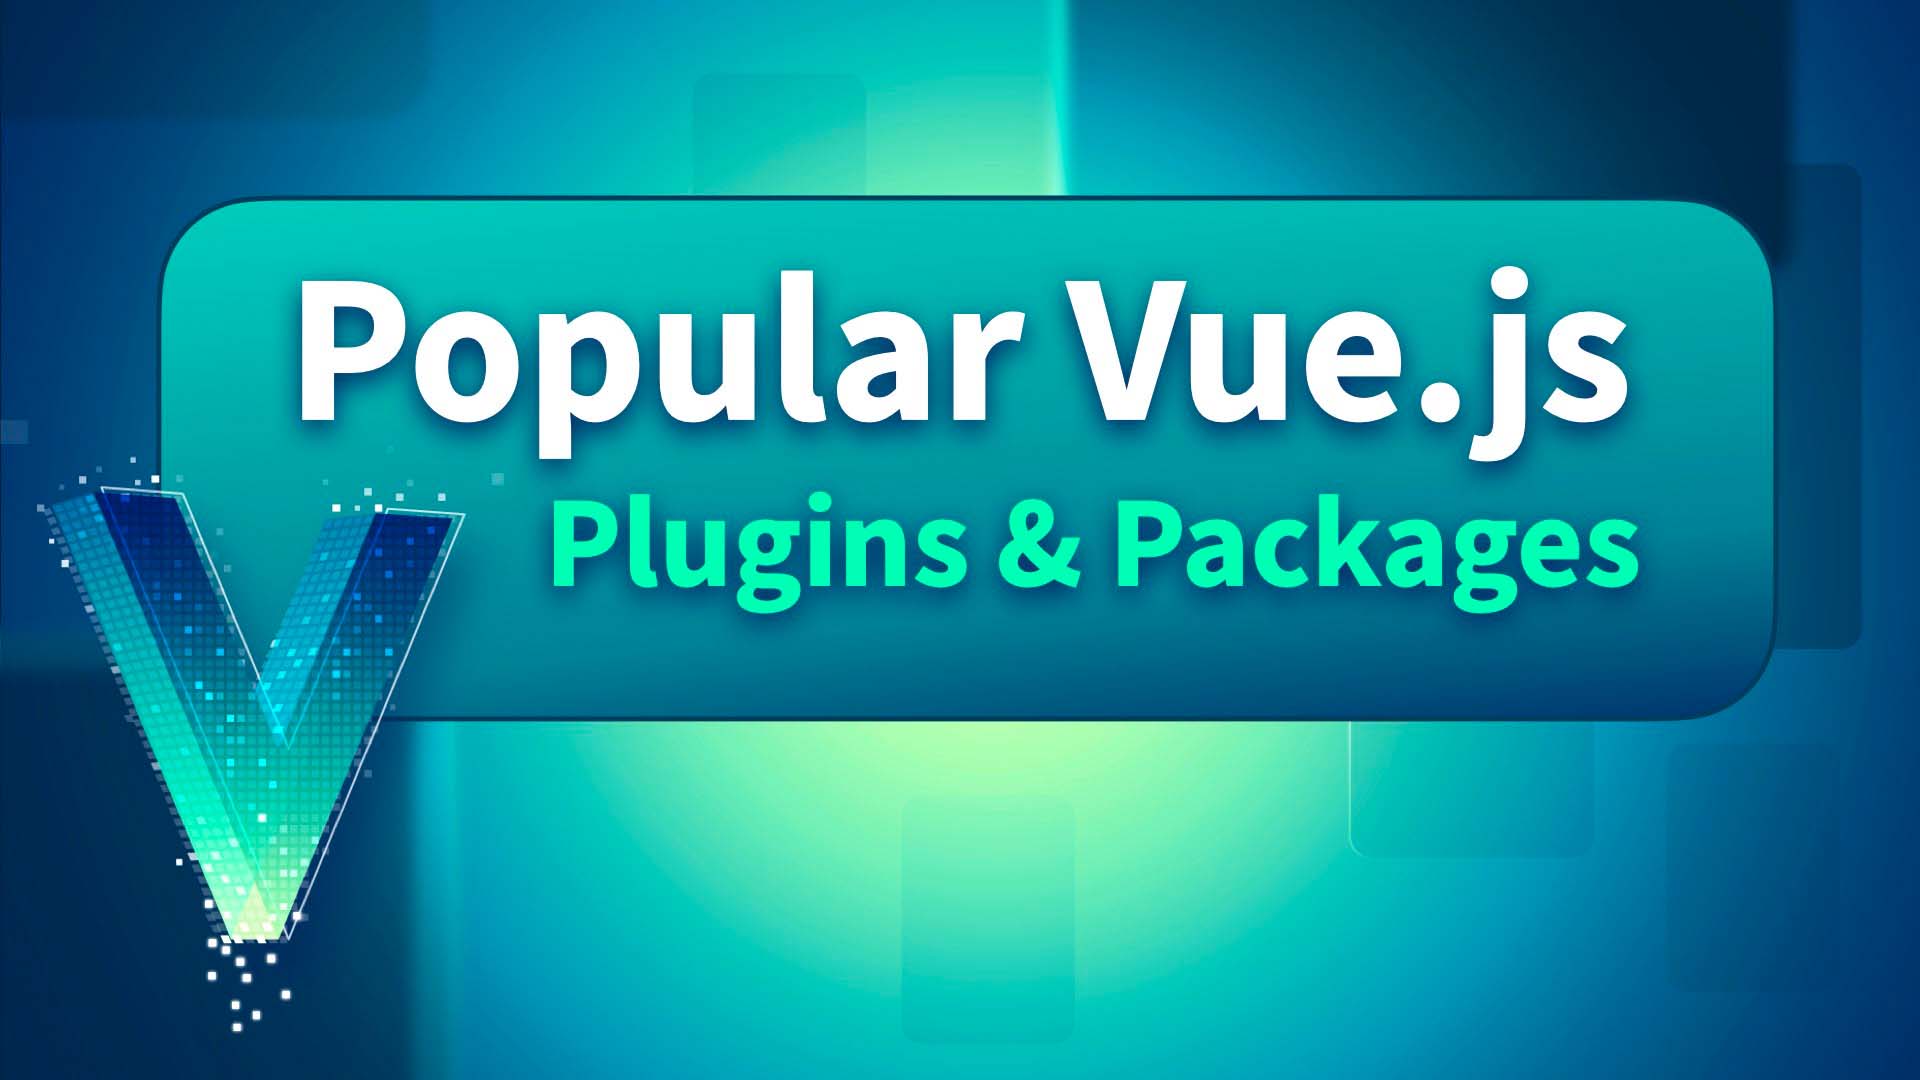 Most popular Vue.js plugins & packages